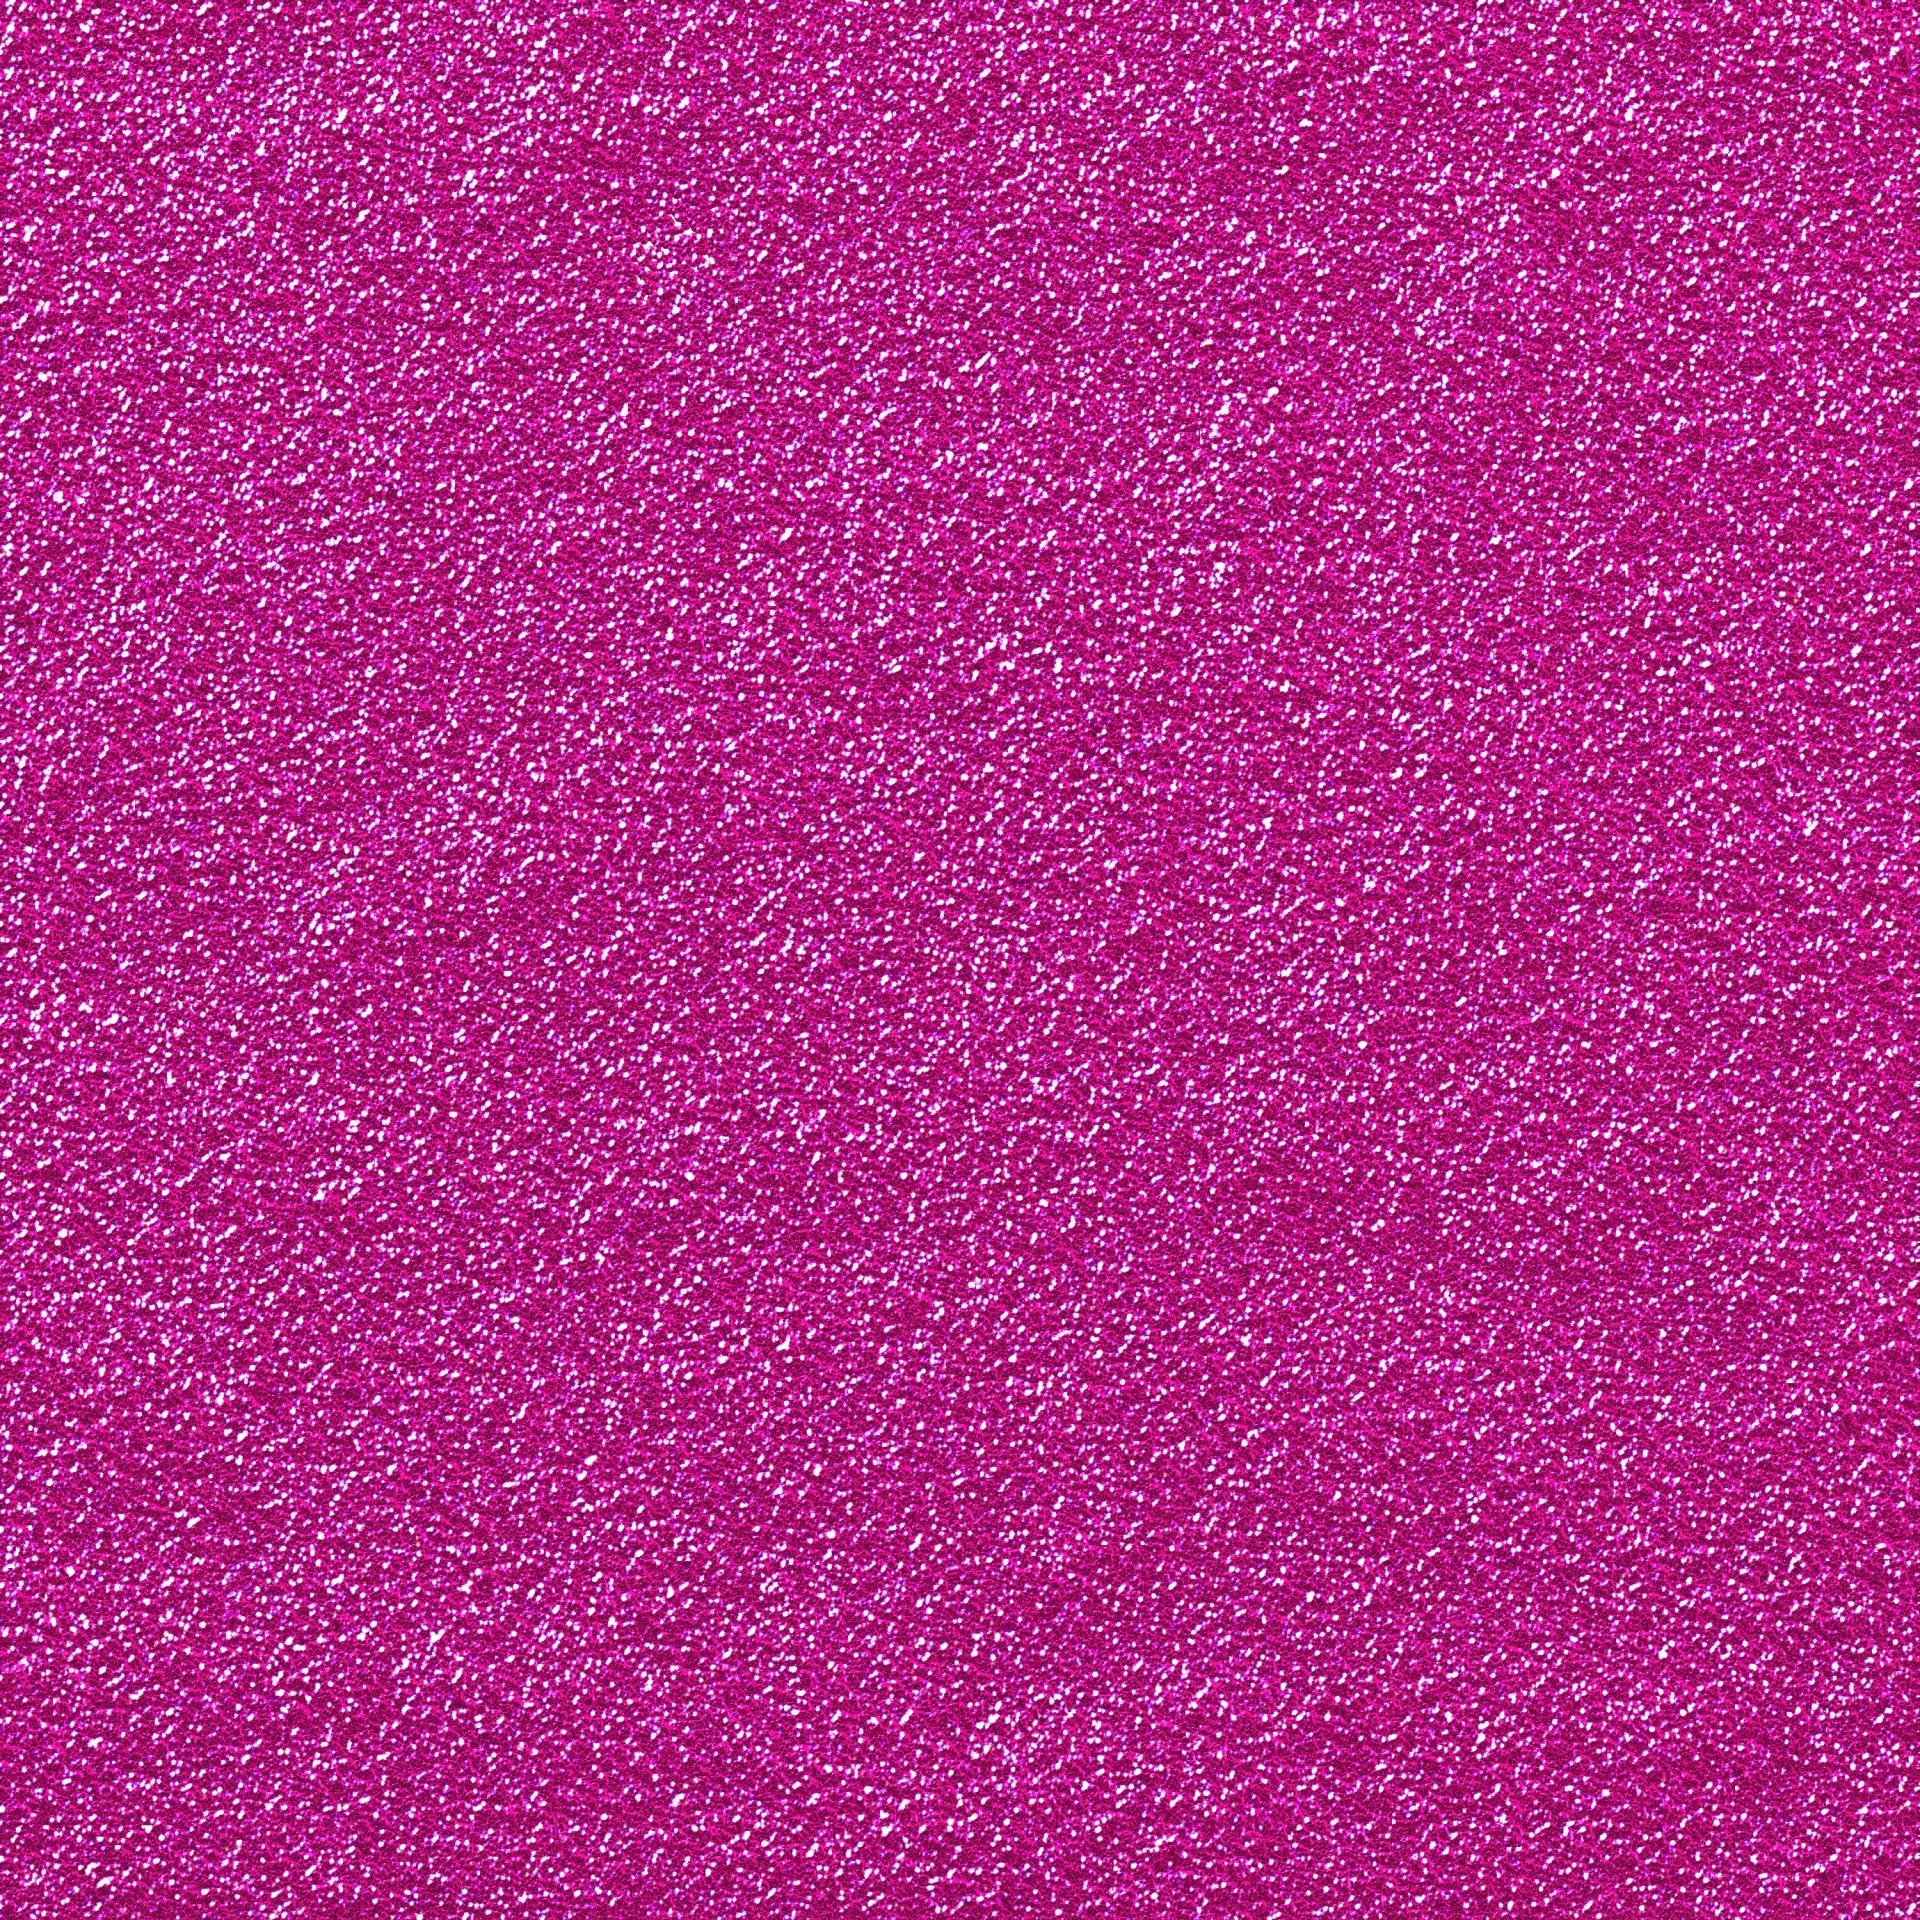 Metallic Pink Glitter Texture